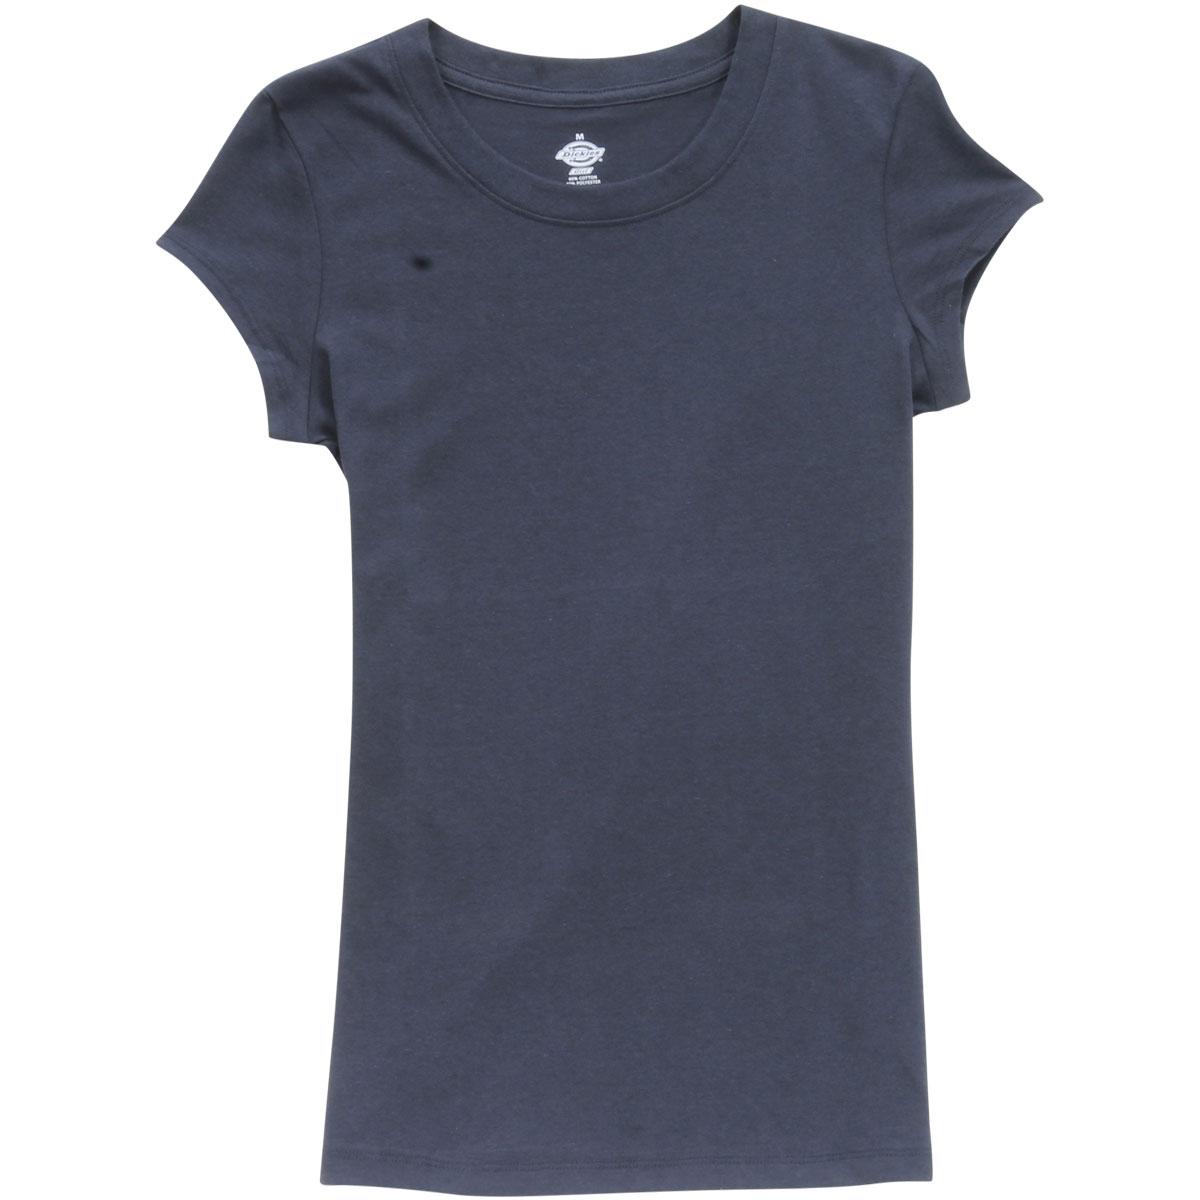 Dickies Girl Junior's Slim Fit Short Sleeve Crew Neck T Shirt - Navy - Small